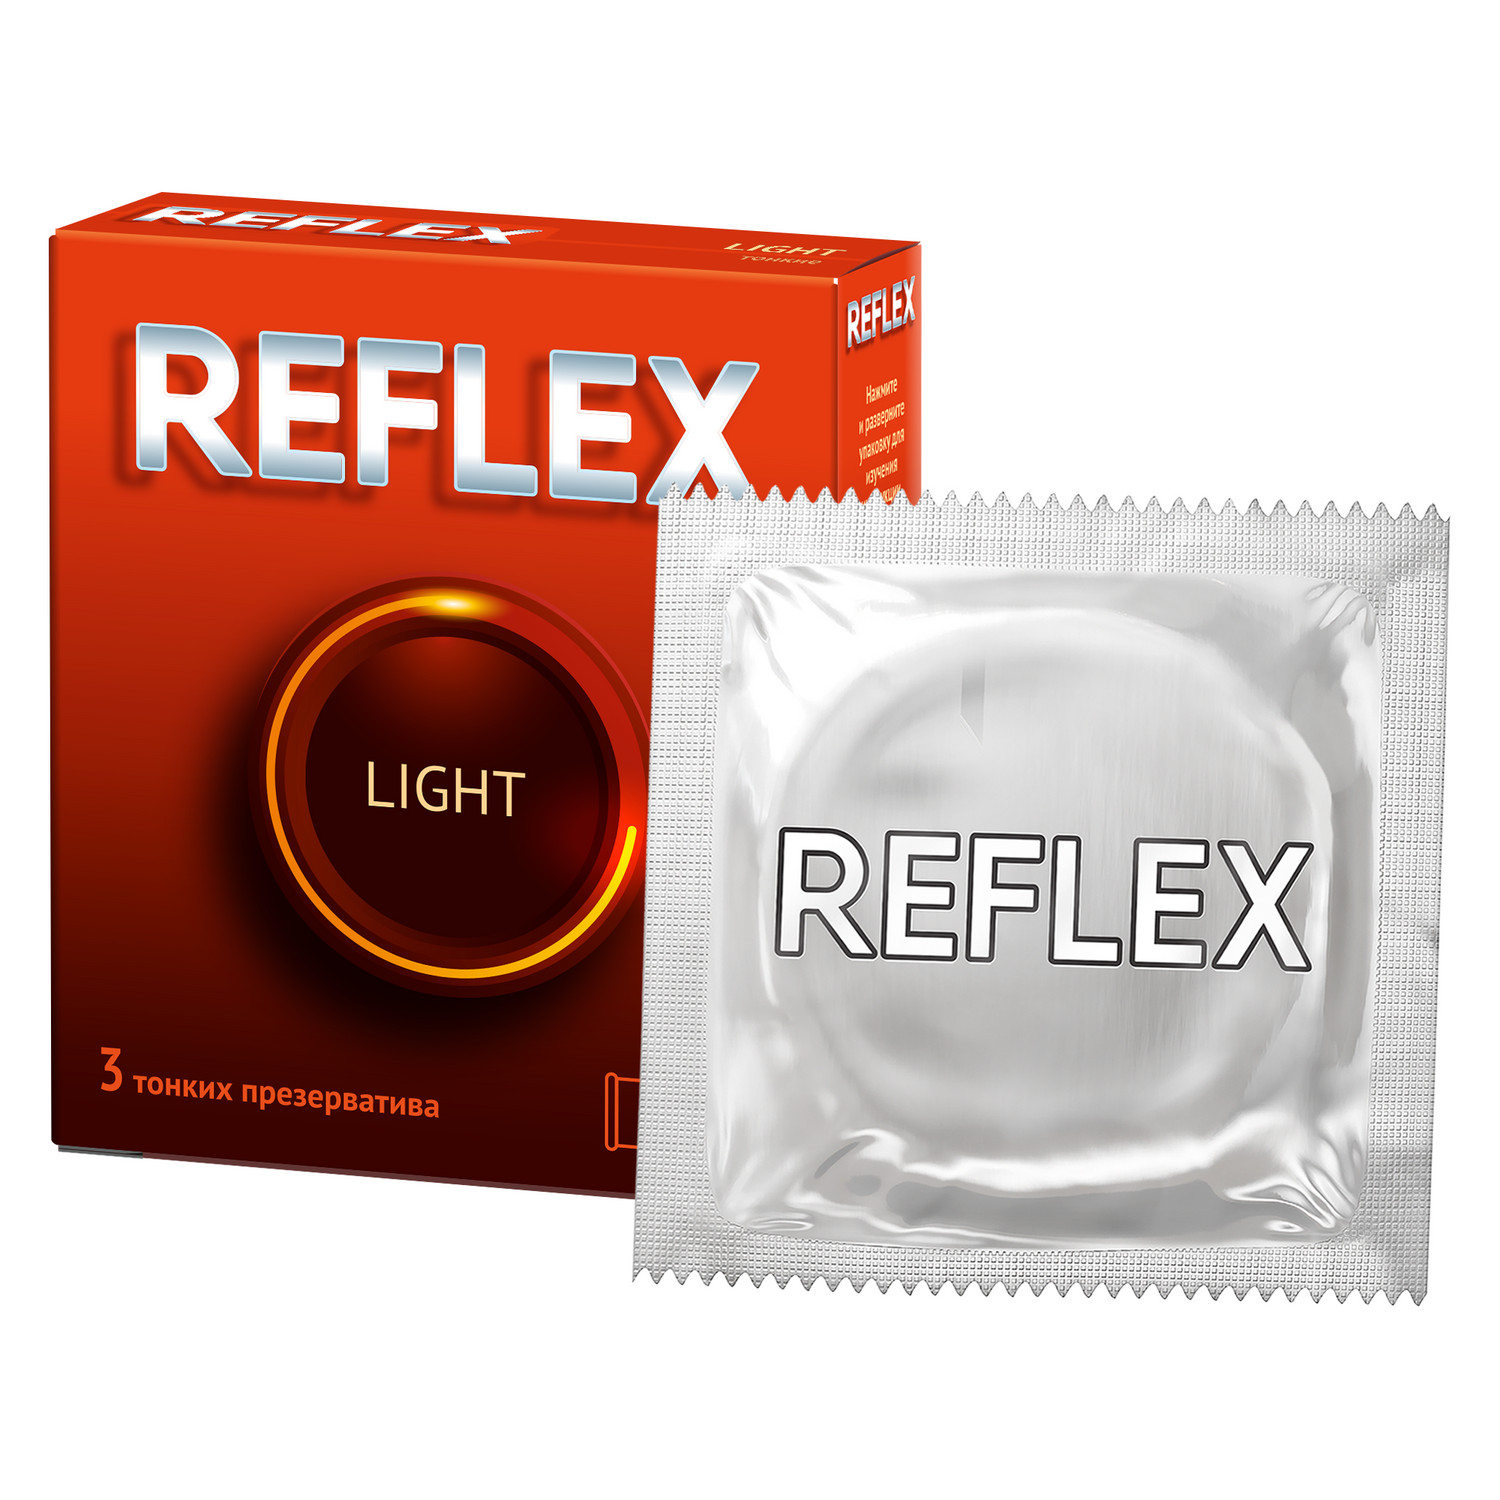 Reflex Light презервативы в смазке, 3 шт. презервативы lavest анатомической формы розового а 7 шт